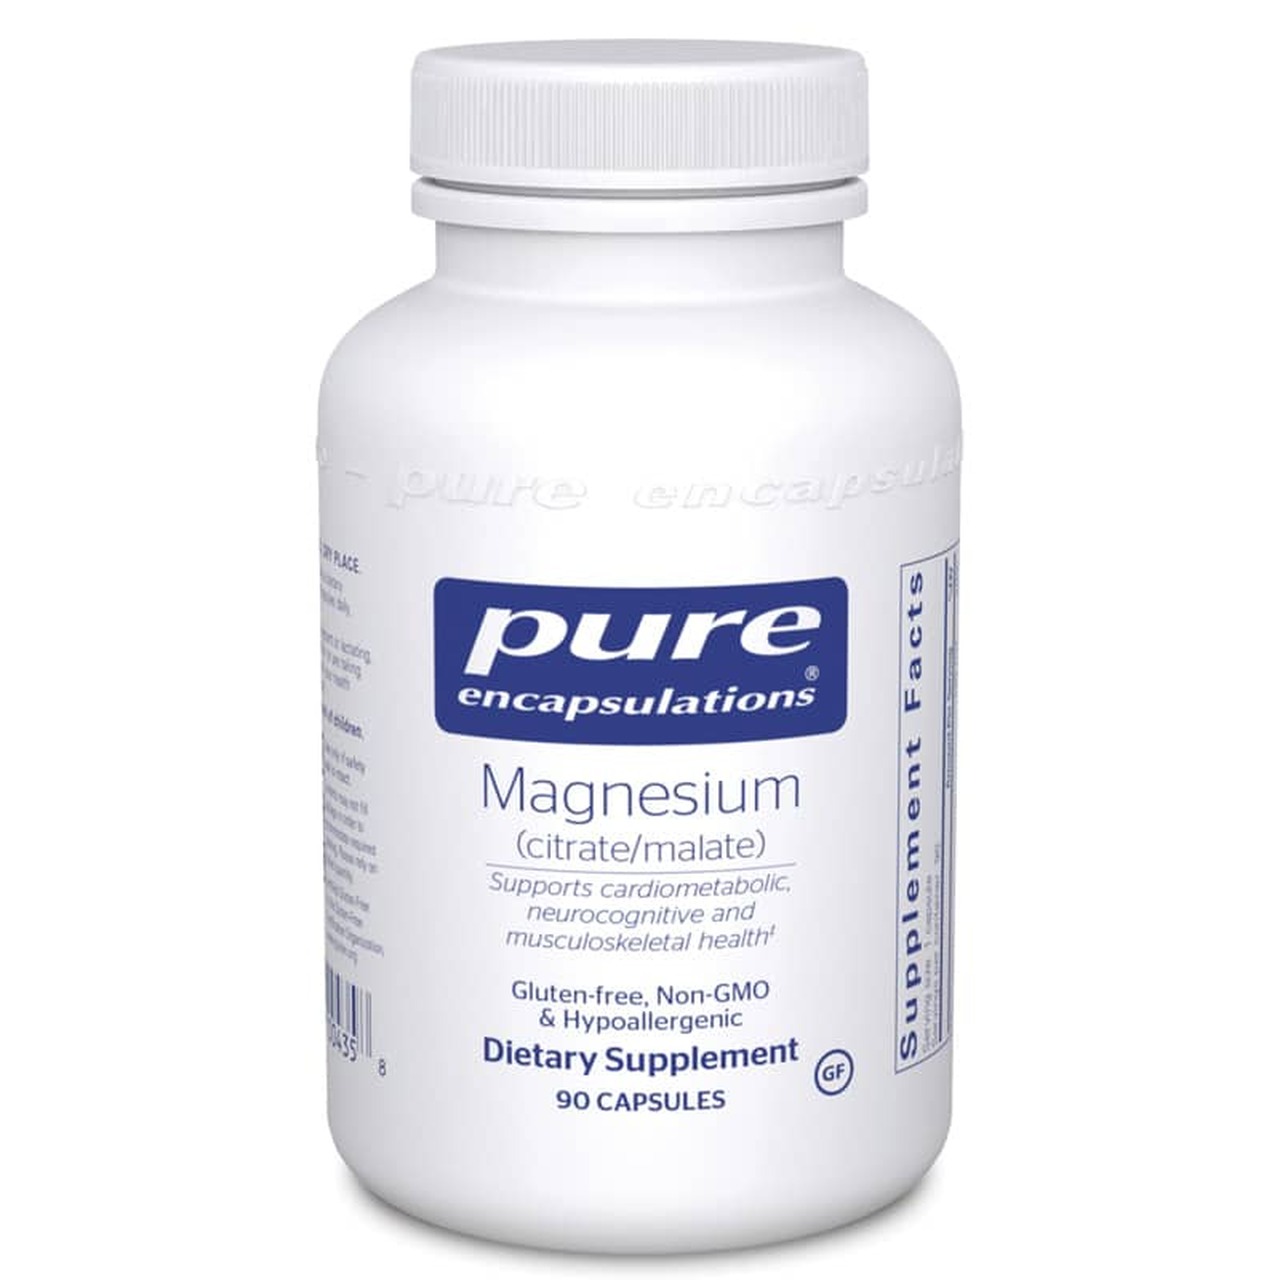 MagnesiumCitrateMalate90s